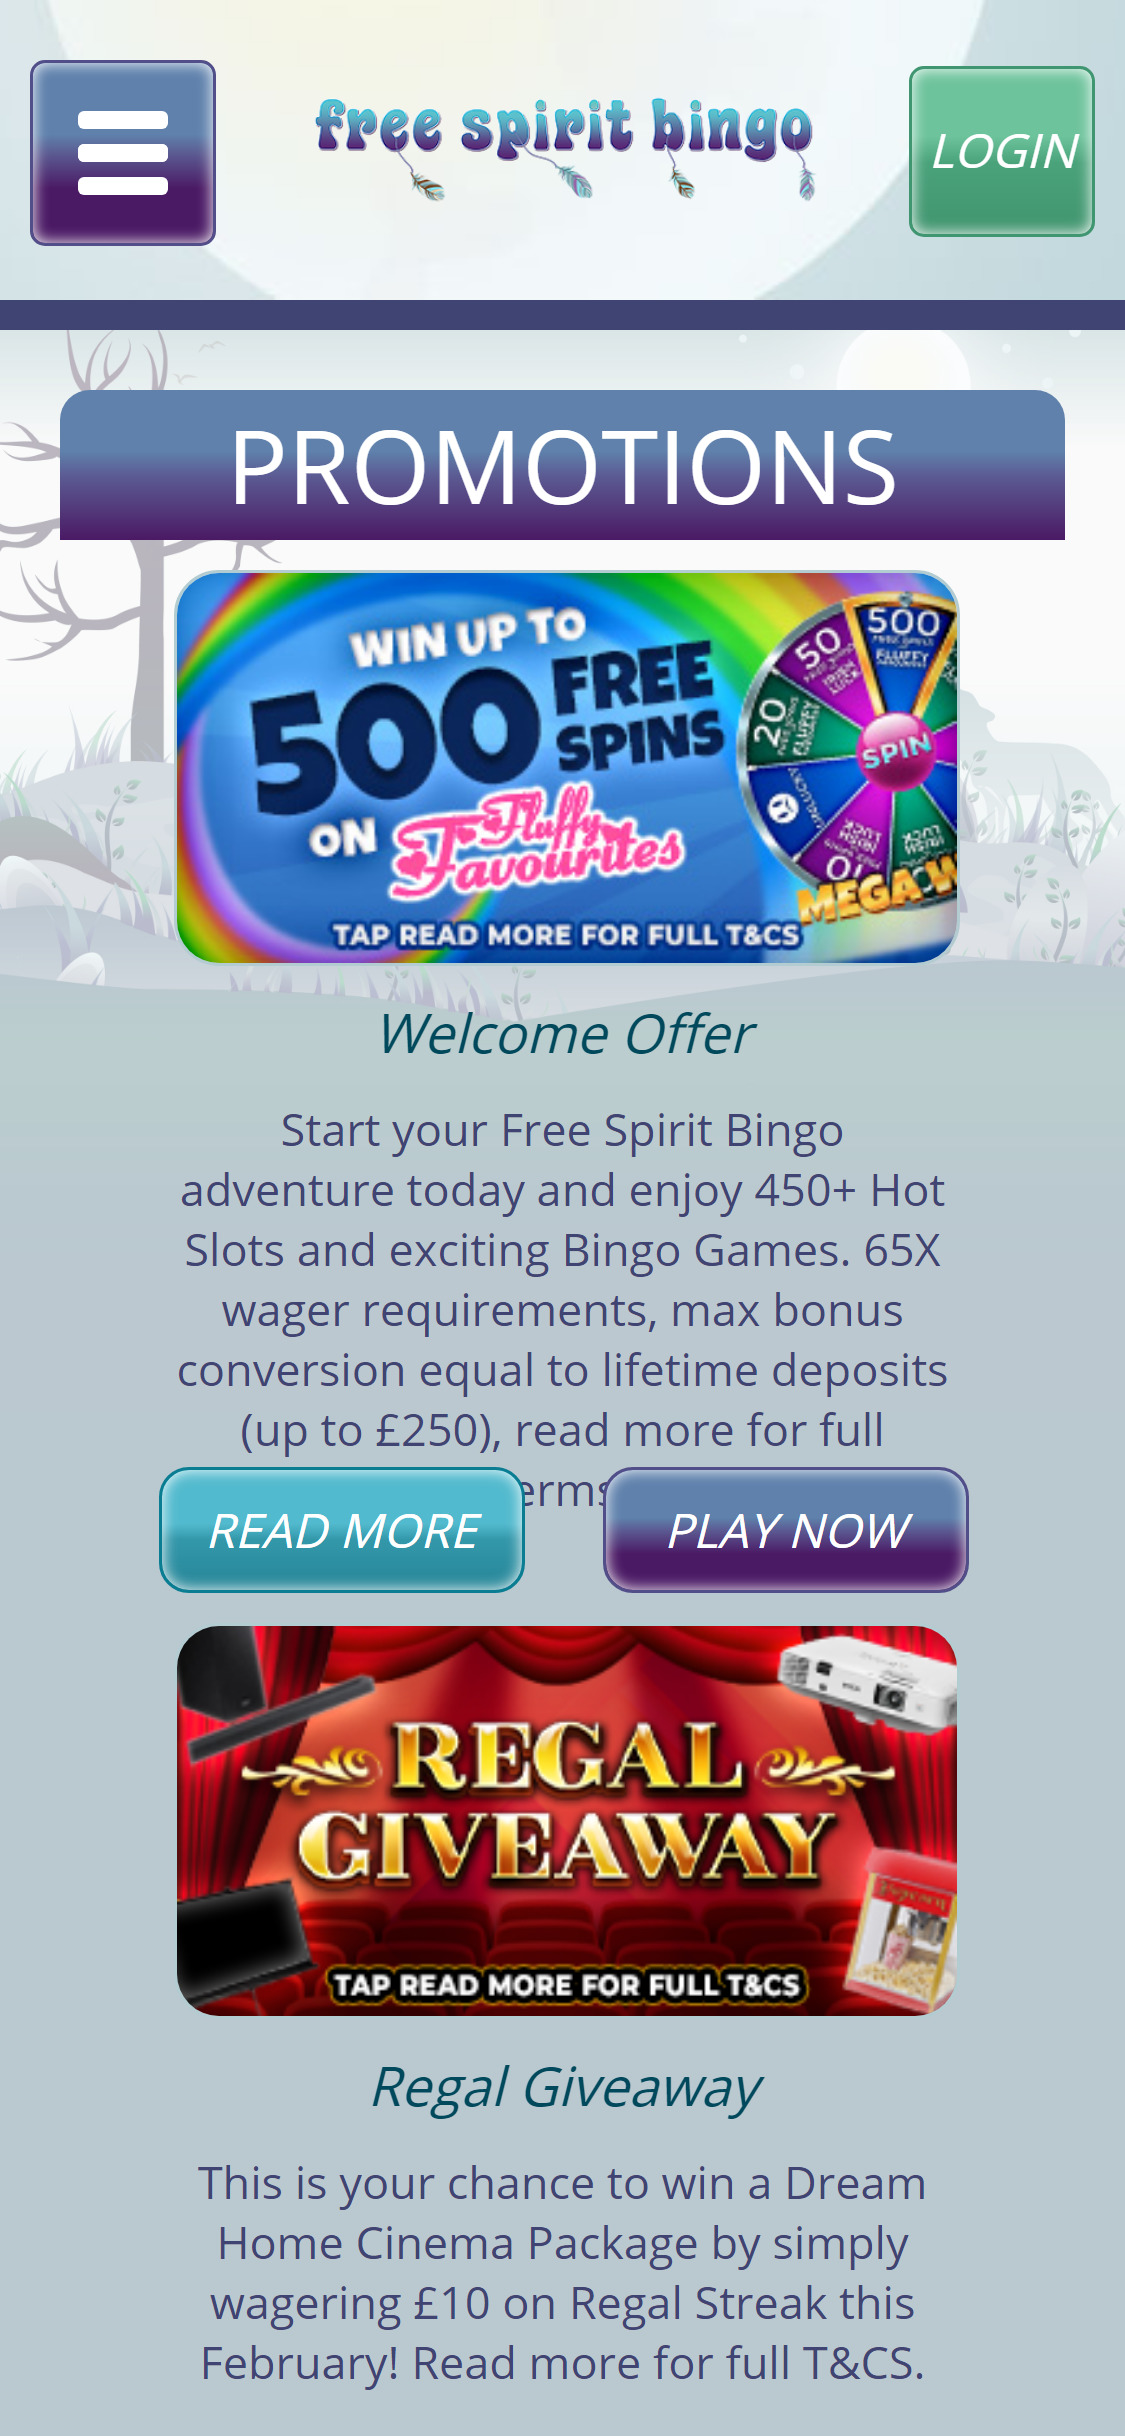 Free Spirit Bingo Casino Mobile No Deposit Bonus Review